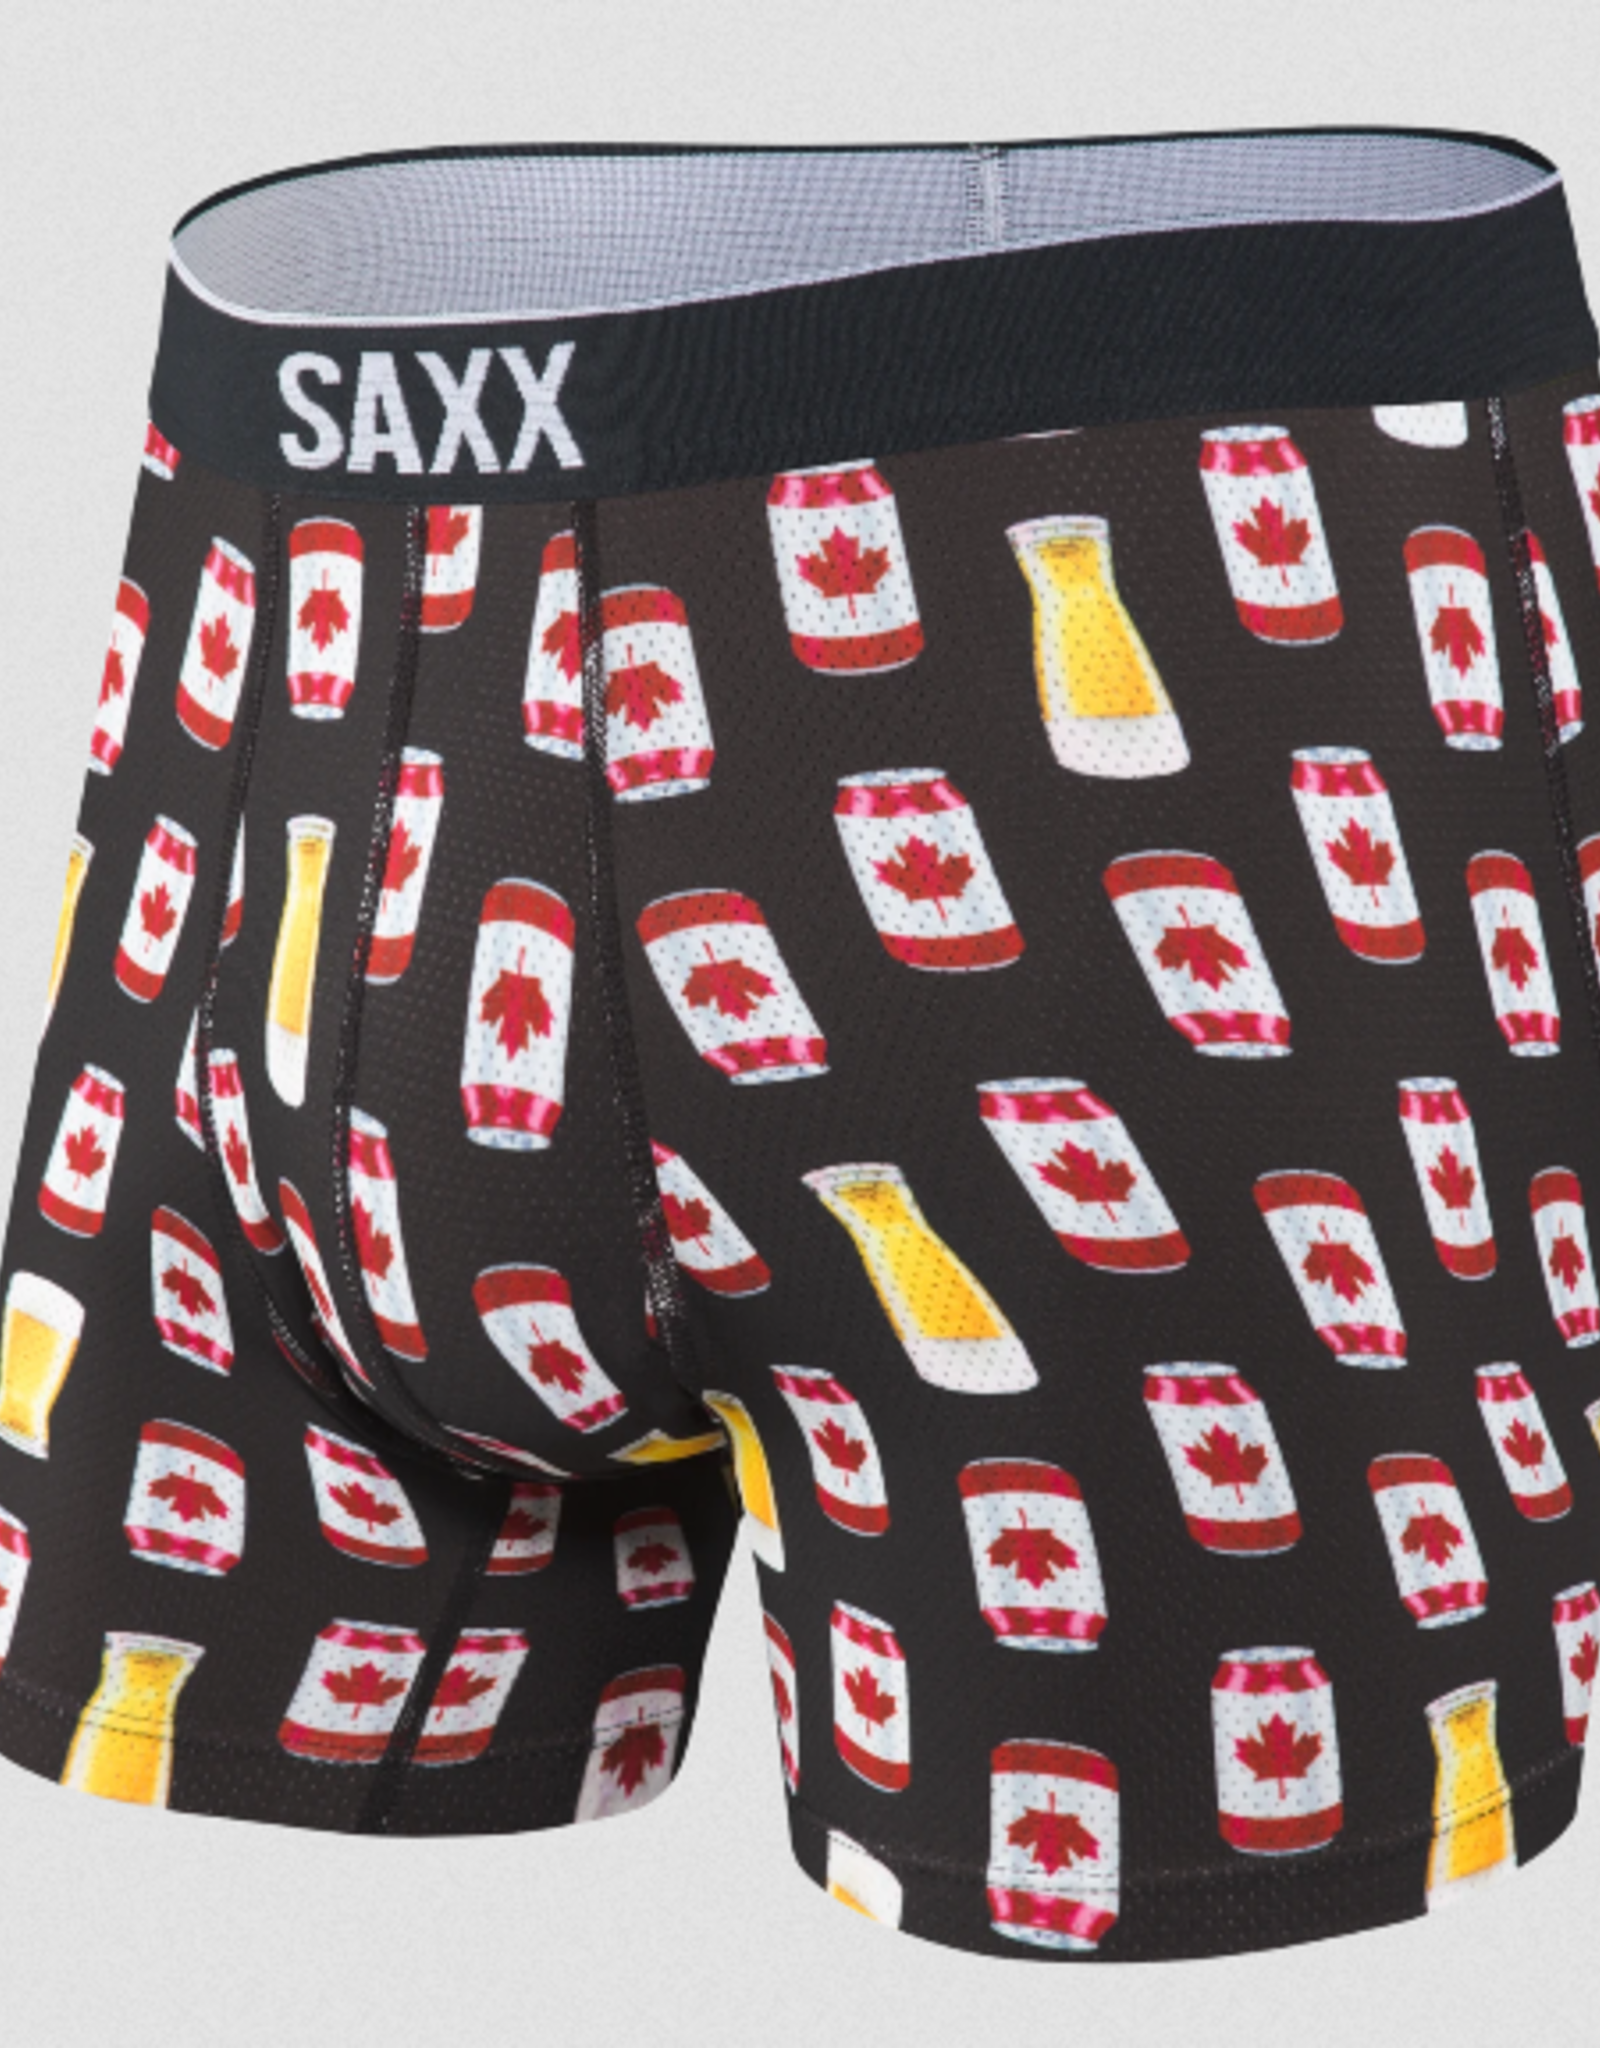 Saxx SAXX VOLT BOXER BRIEF CANADIAN LAGER